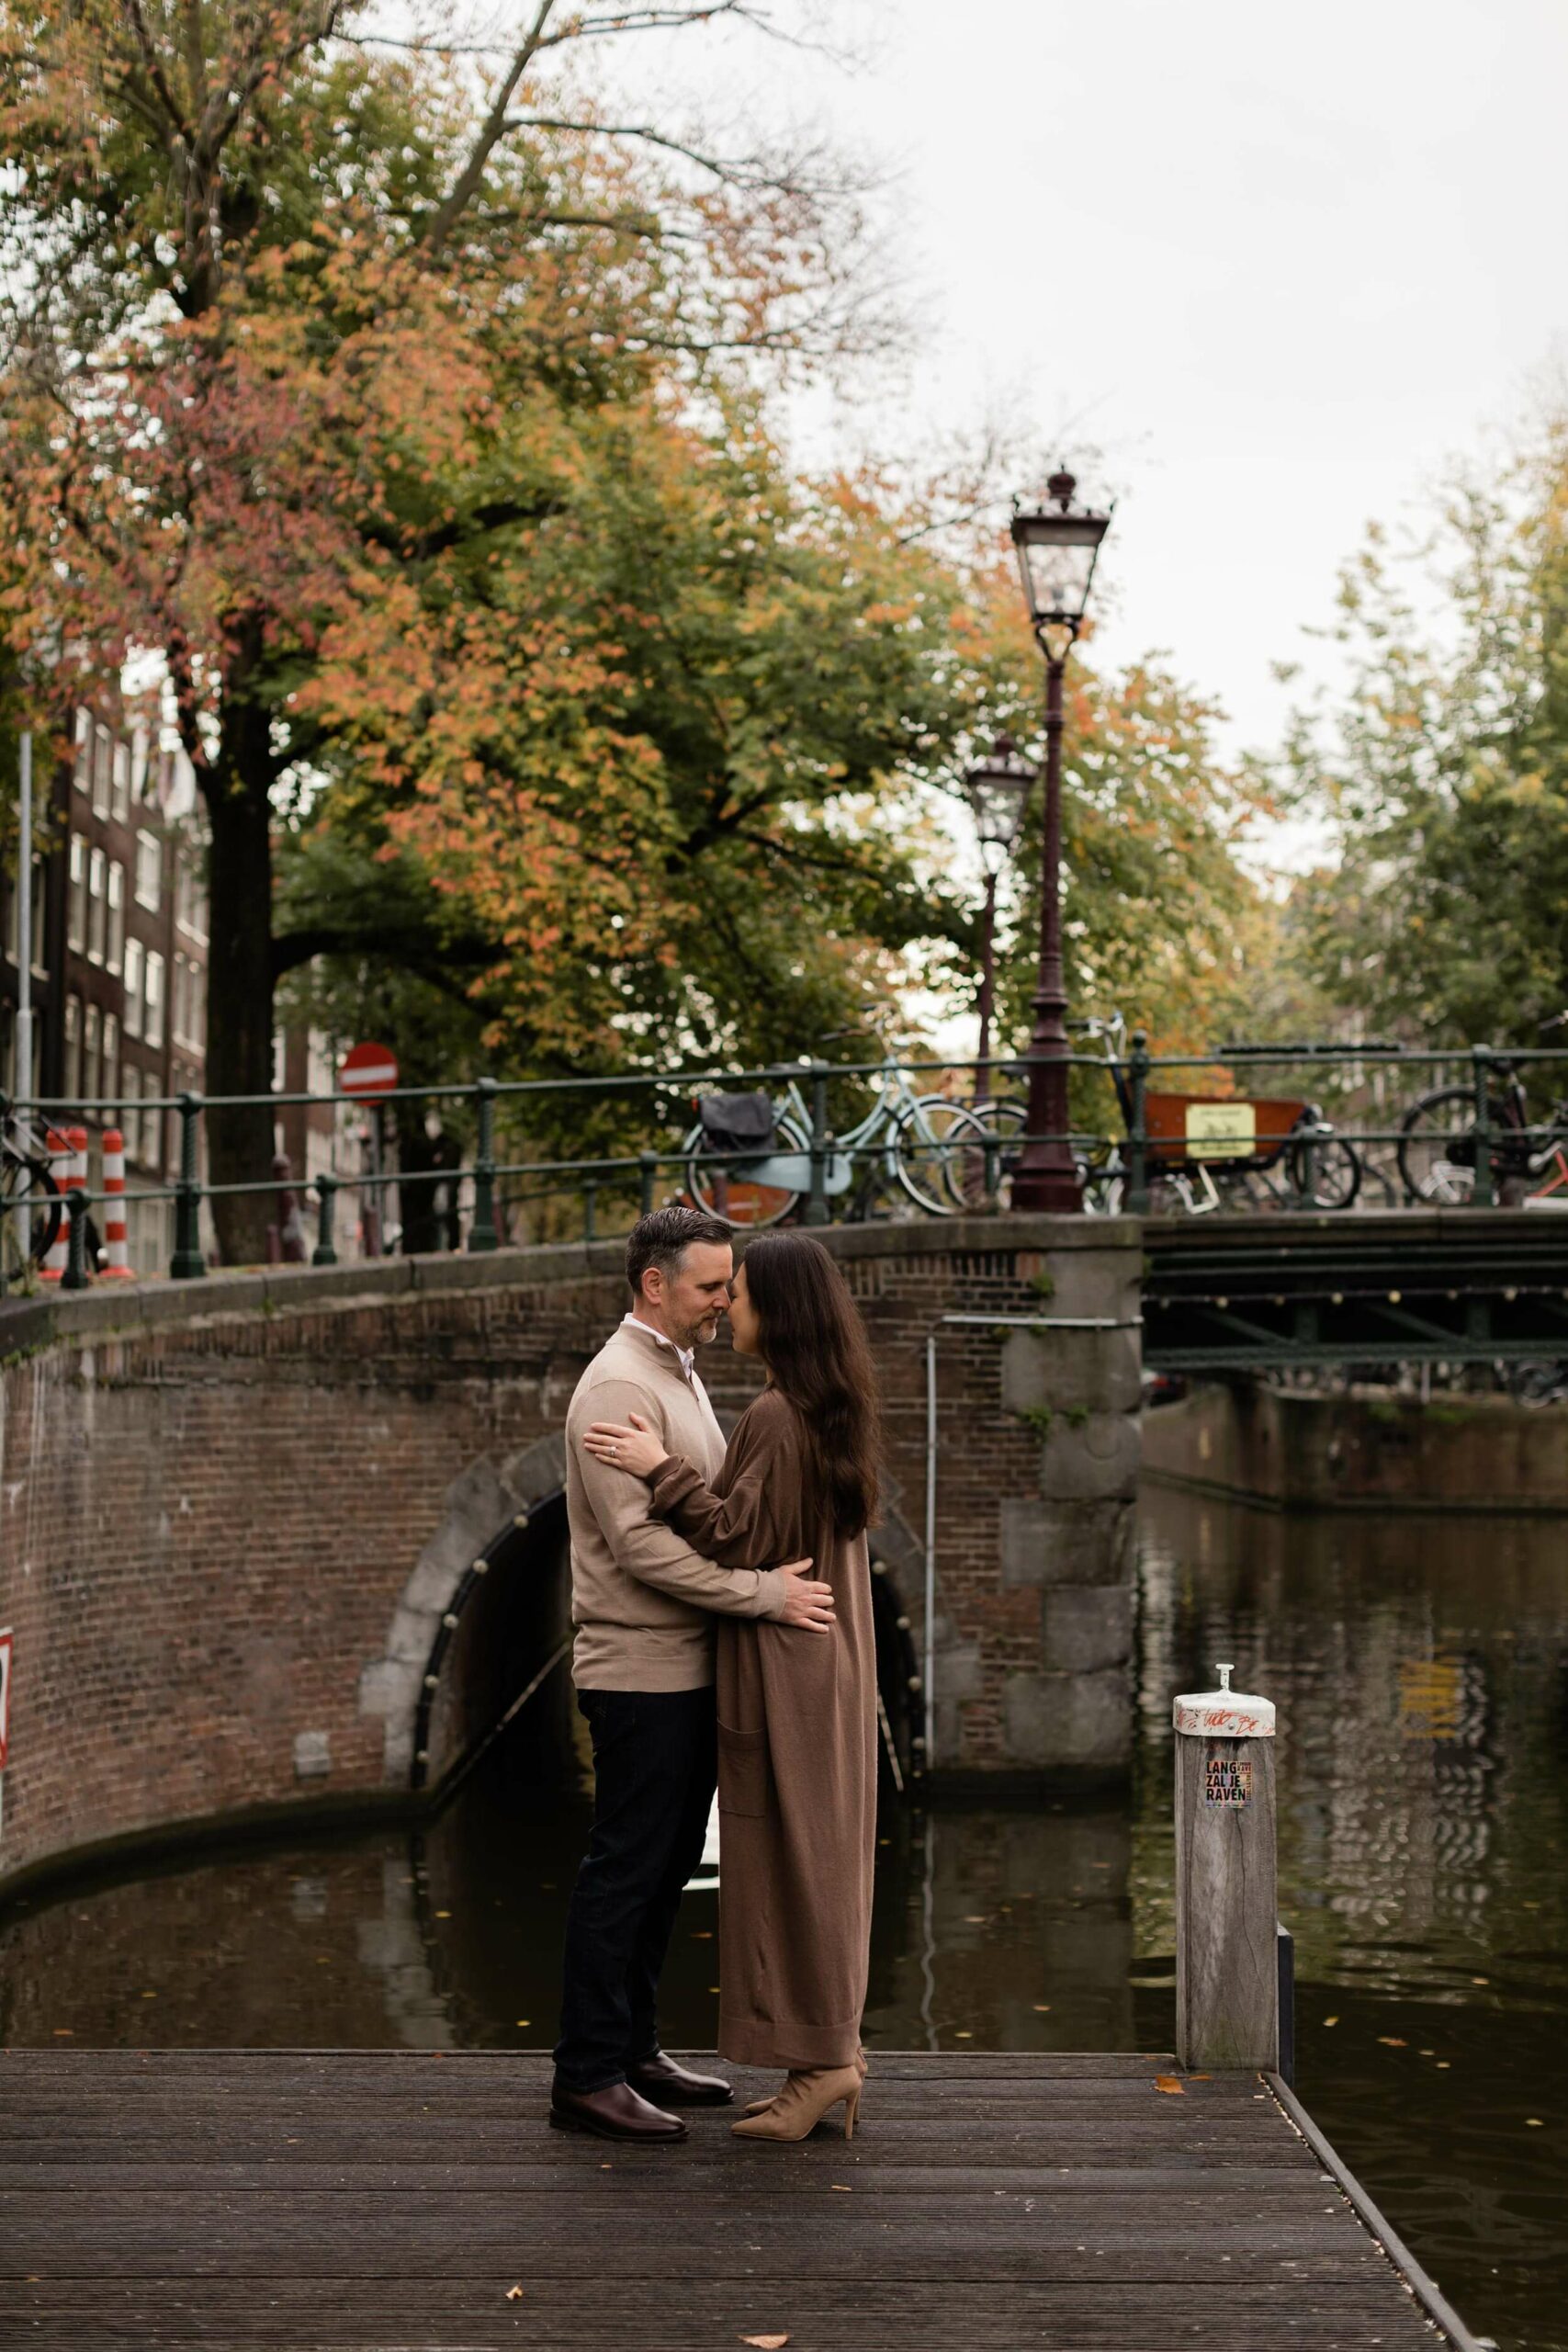 alt="romantic couples photoshoot in Amsterdam"